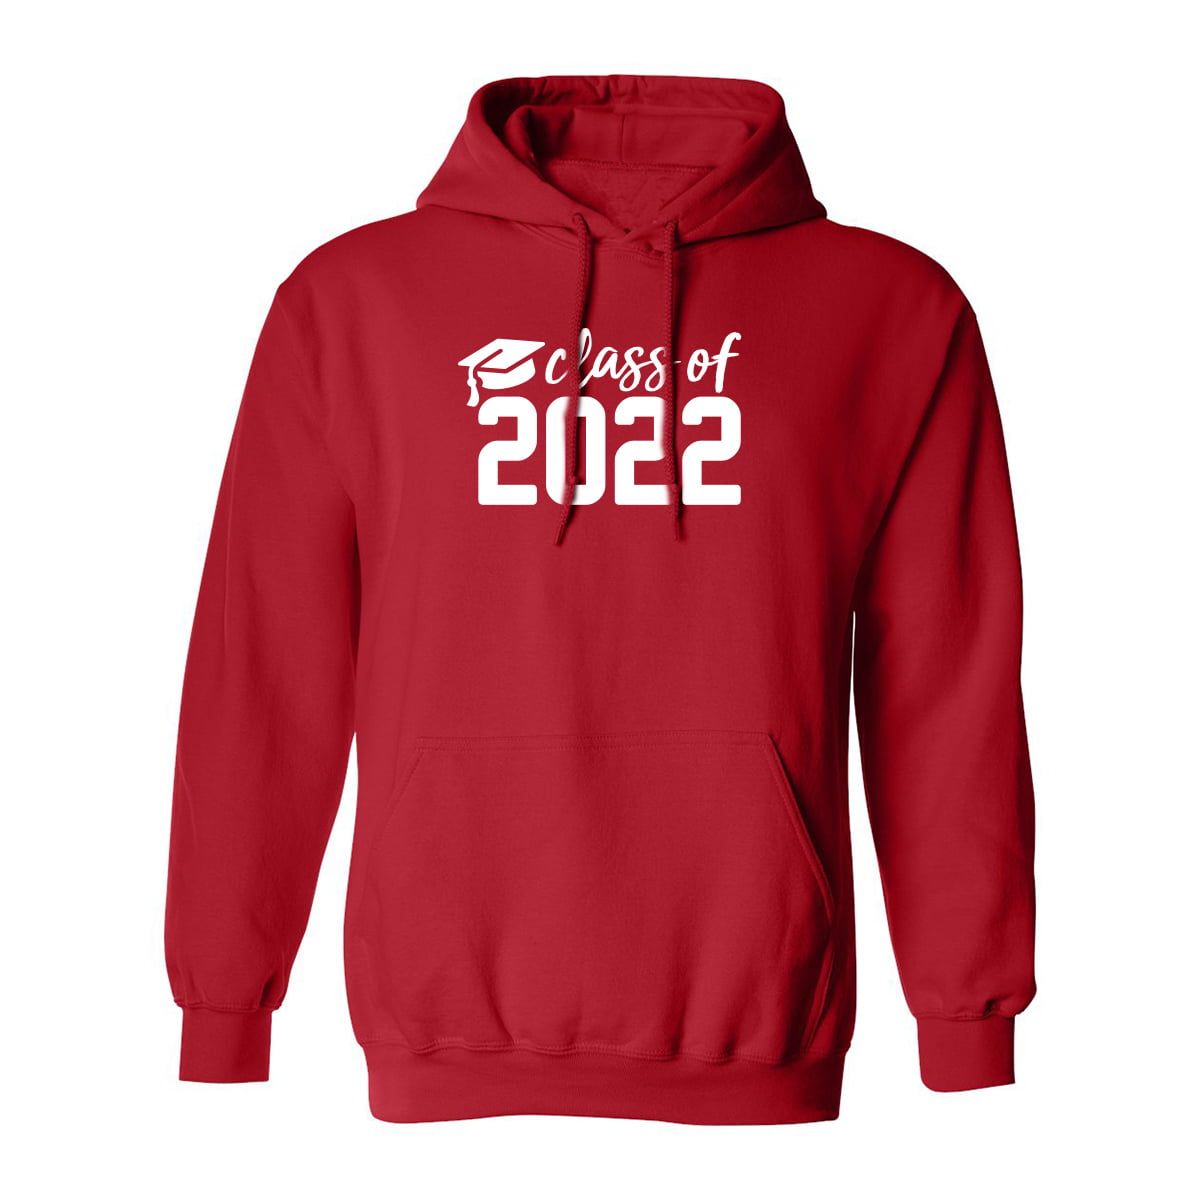 Class of 2021 Unisex Sweatshirt #3564 